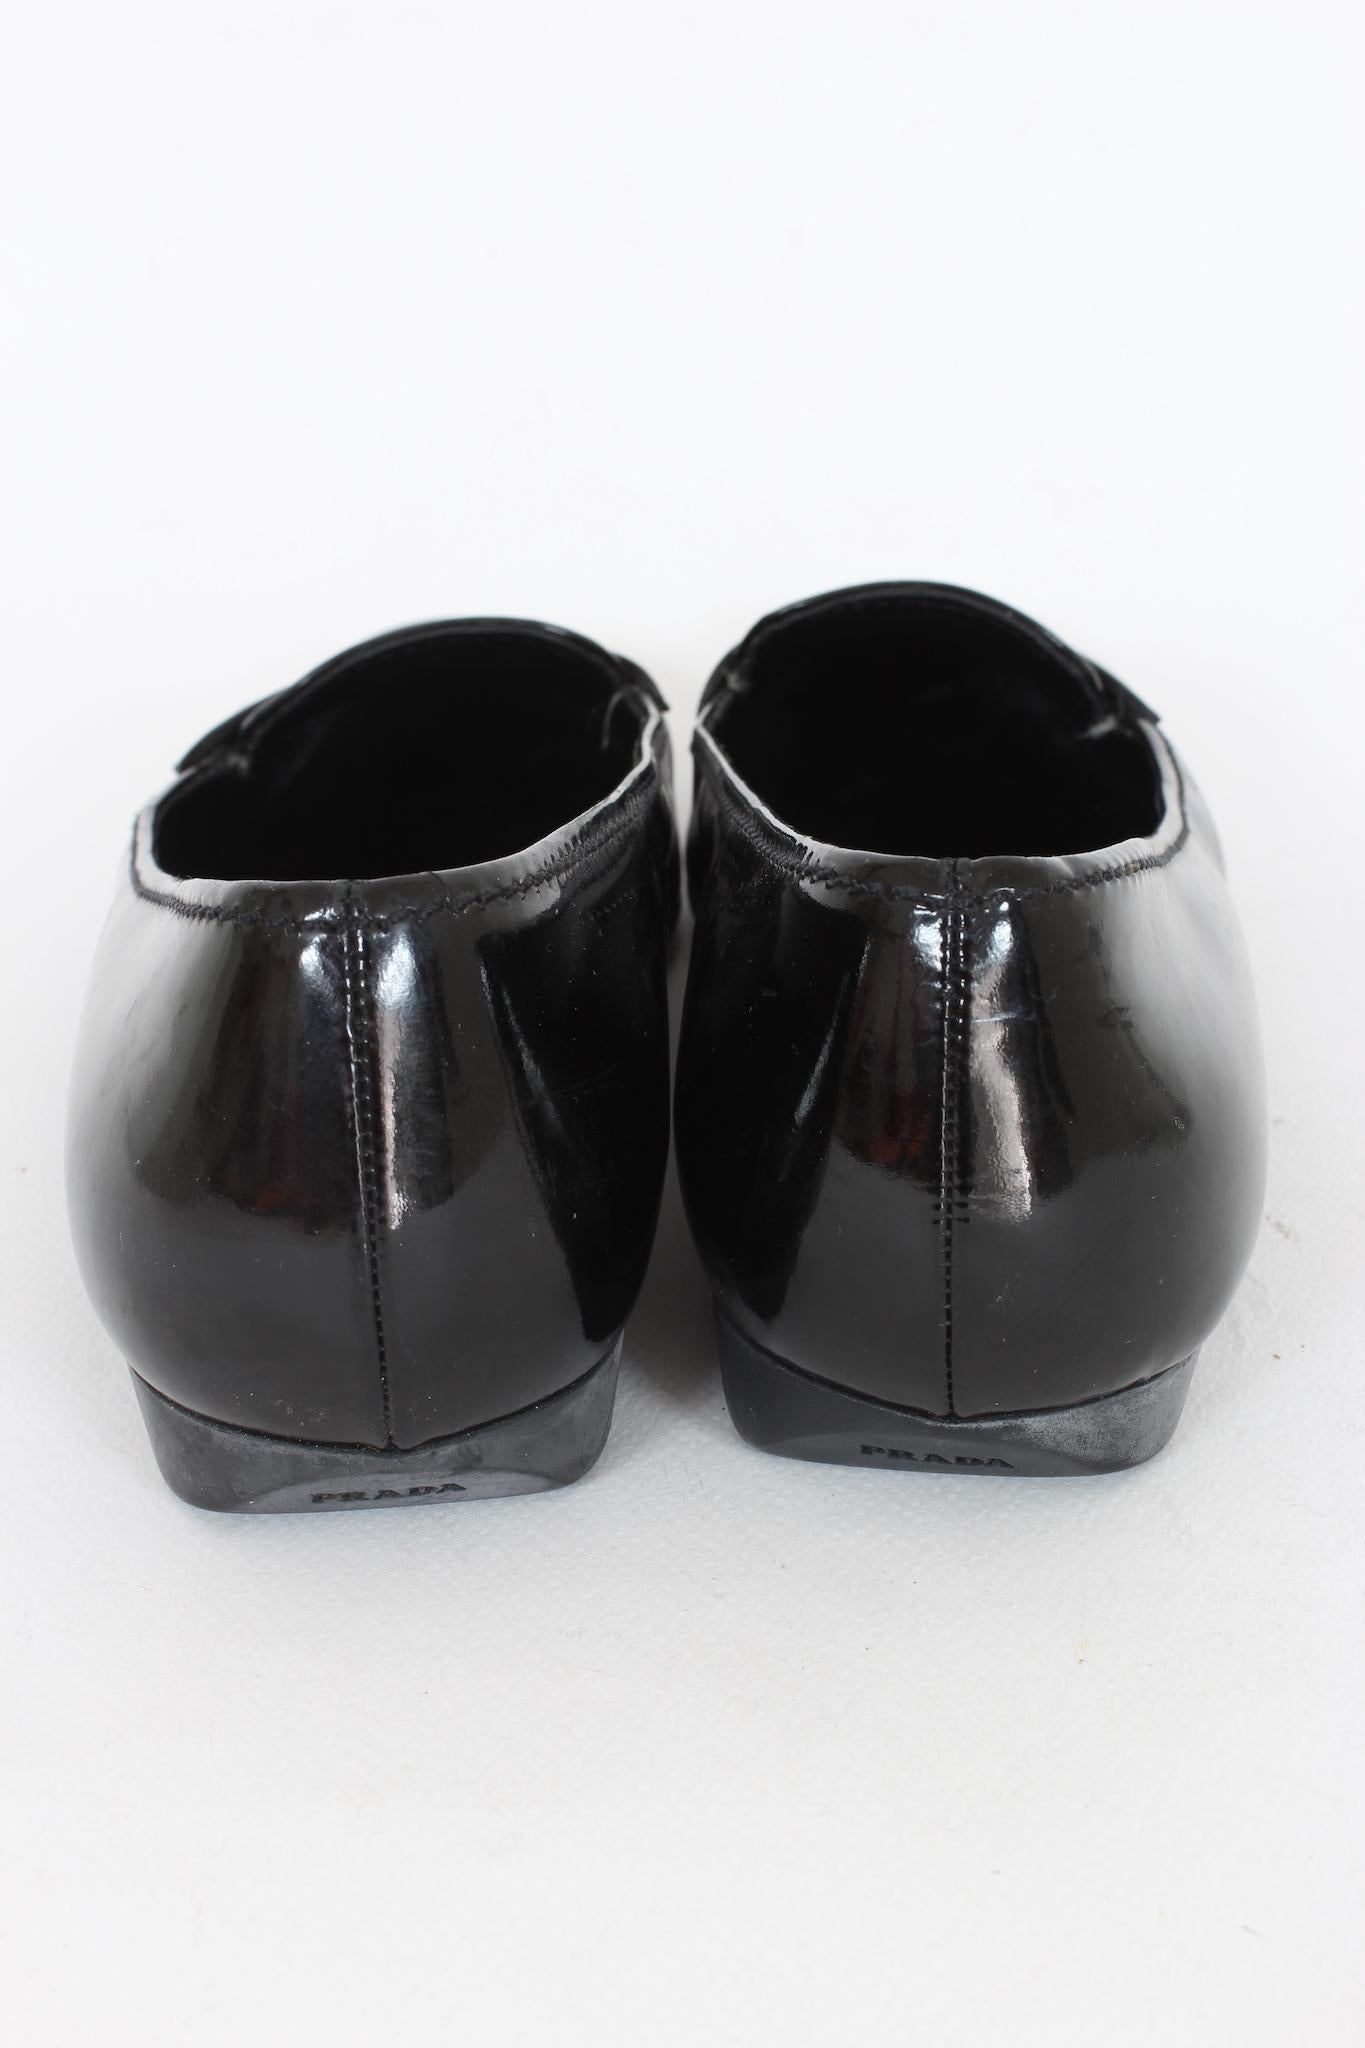 Prada Black Patent Leather Vintage Moccasins Shoes 90s 4